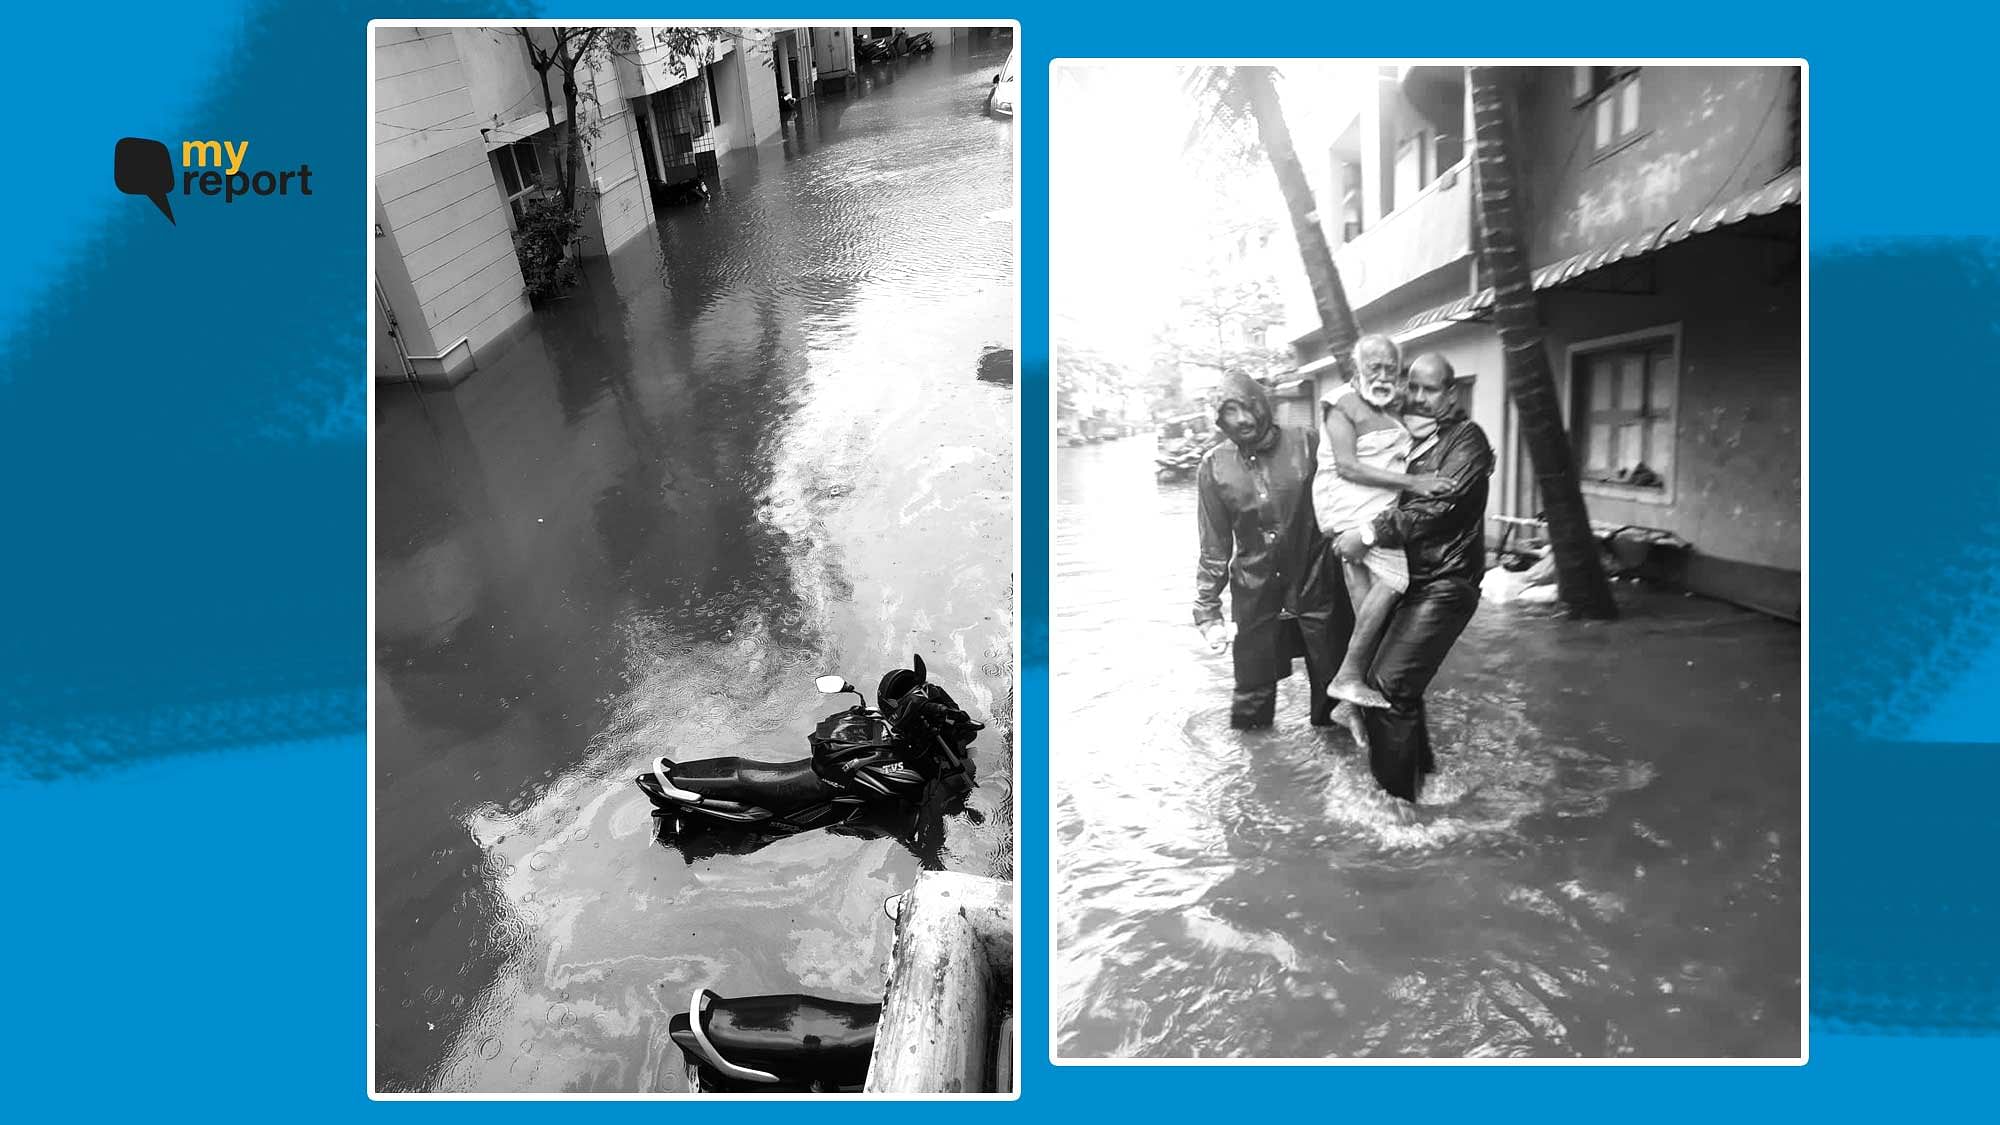 Chennai is flooding even before Cyclone Nivar makes a landfall.